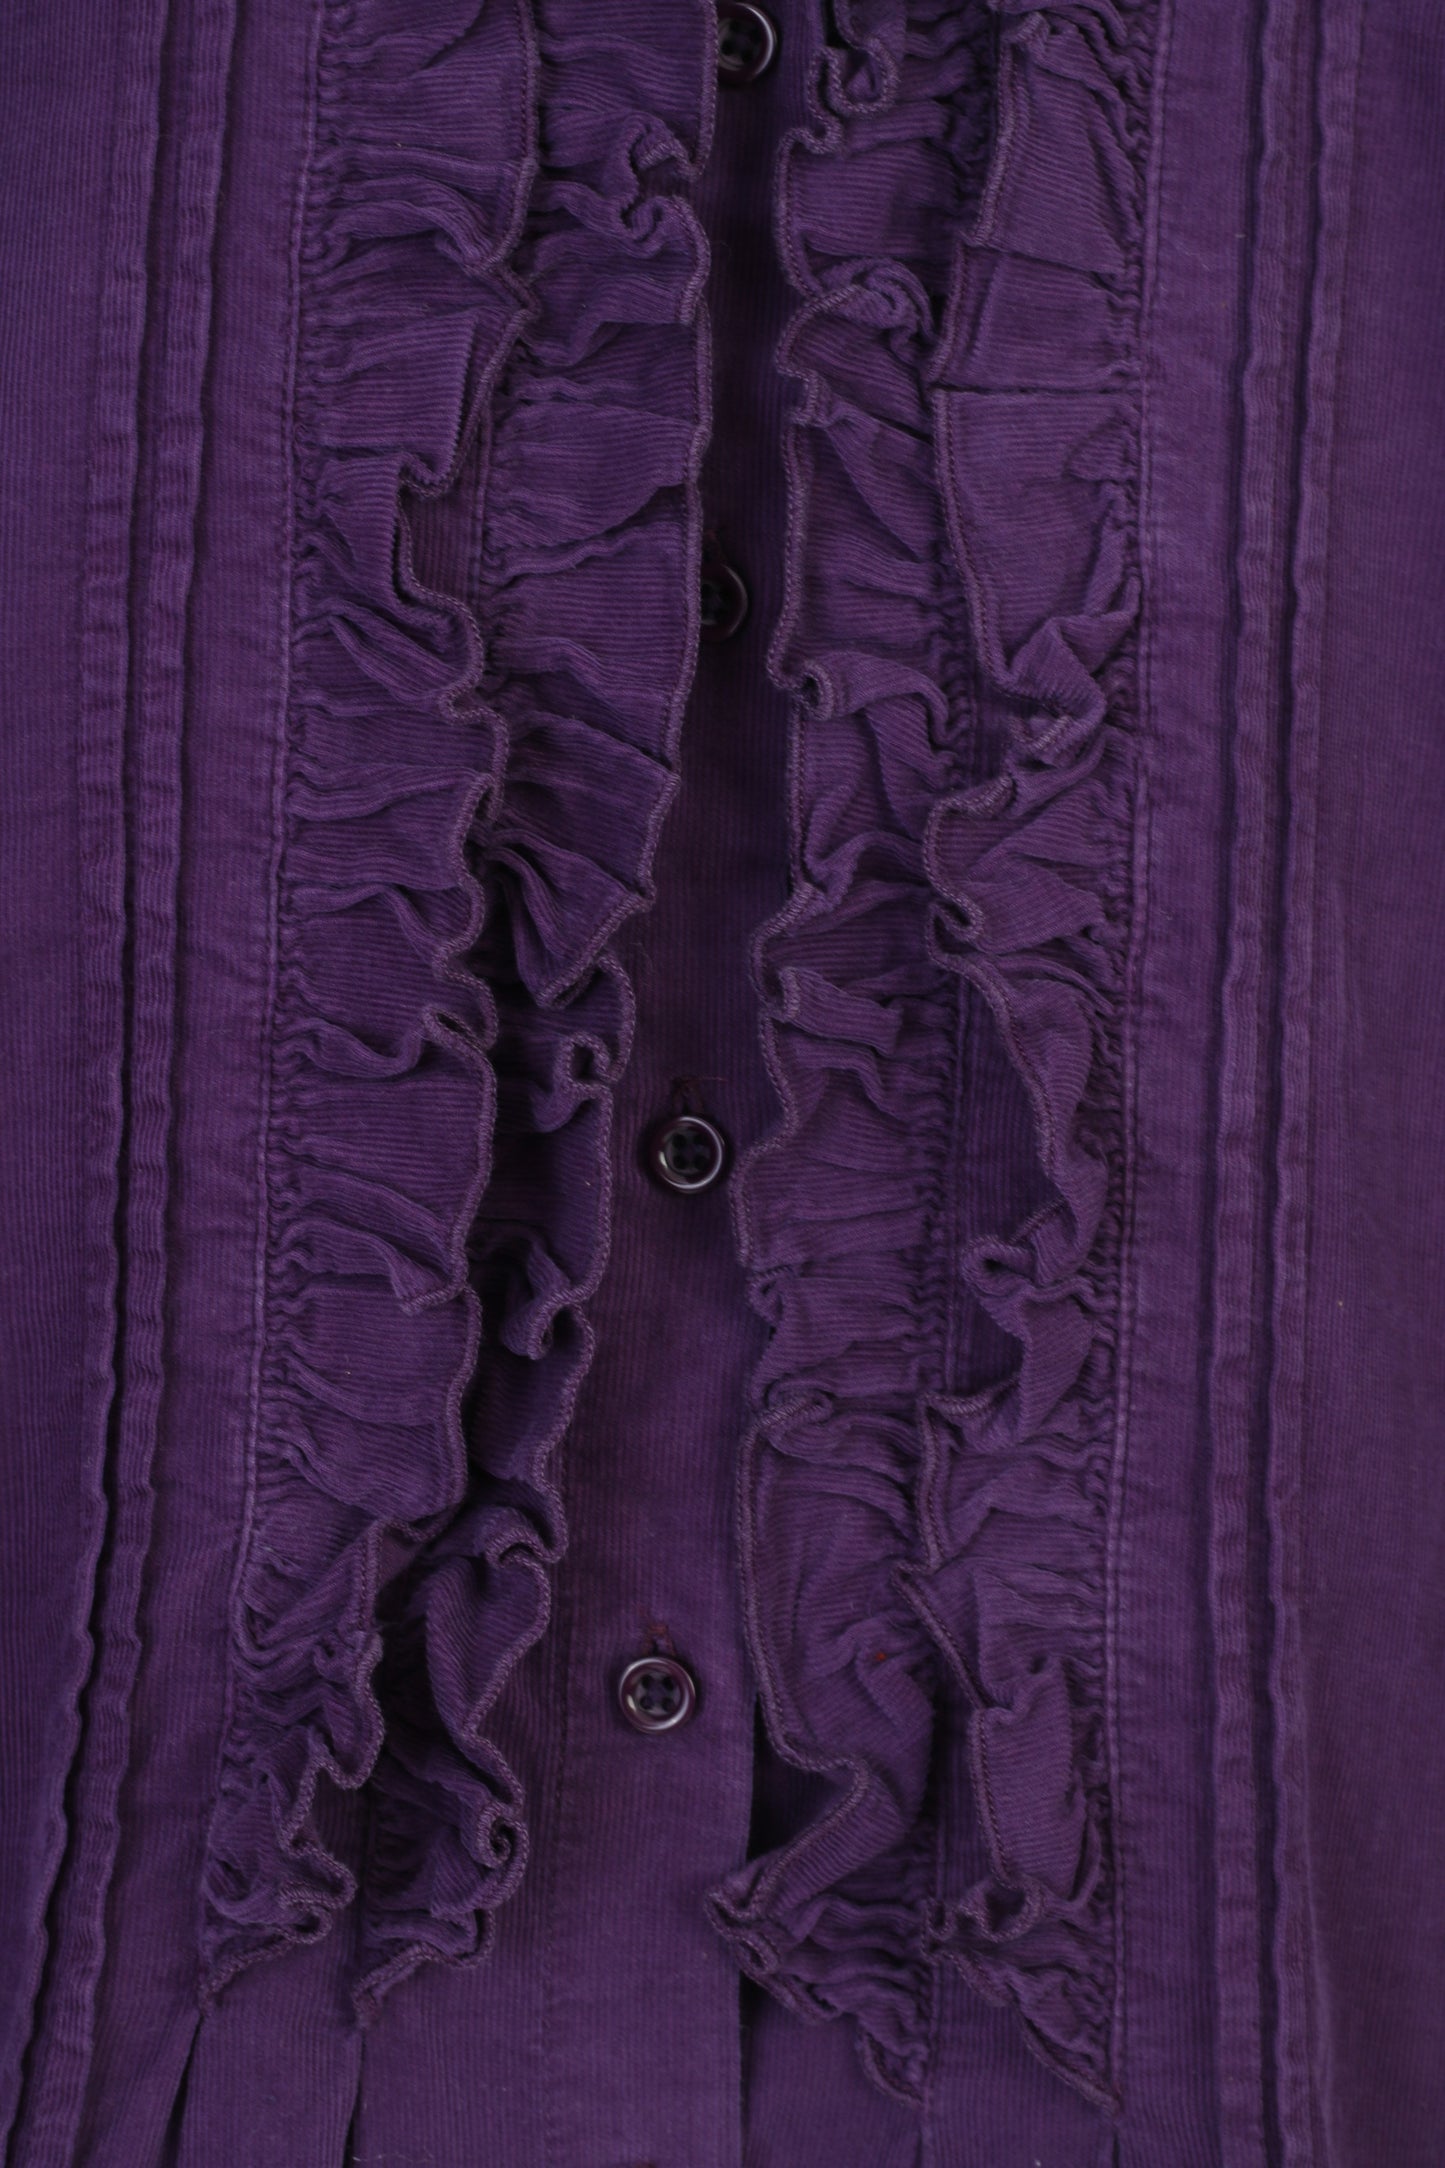 Nadine H Women 42 L Casual Shirt Purple Ruffle Corduroy Cotton Long Sleeve Collar NH Vintage Top